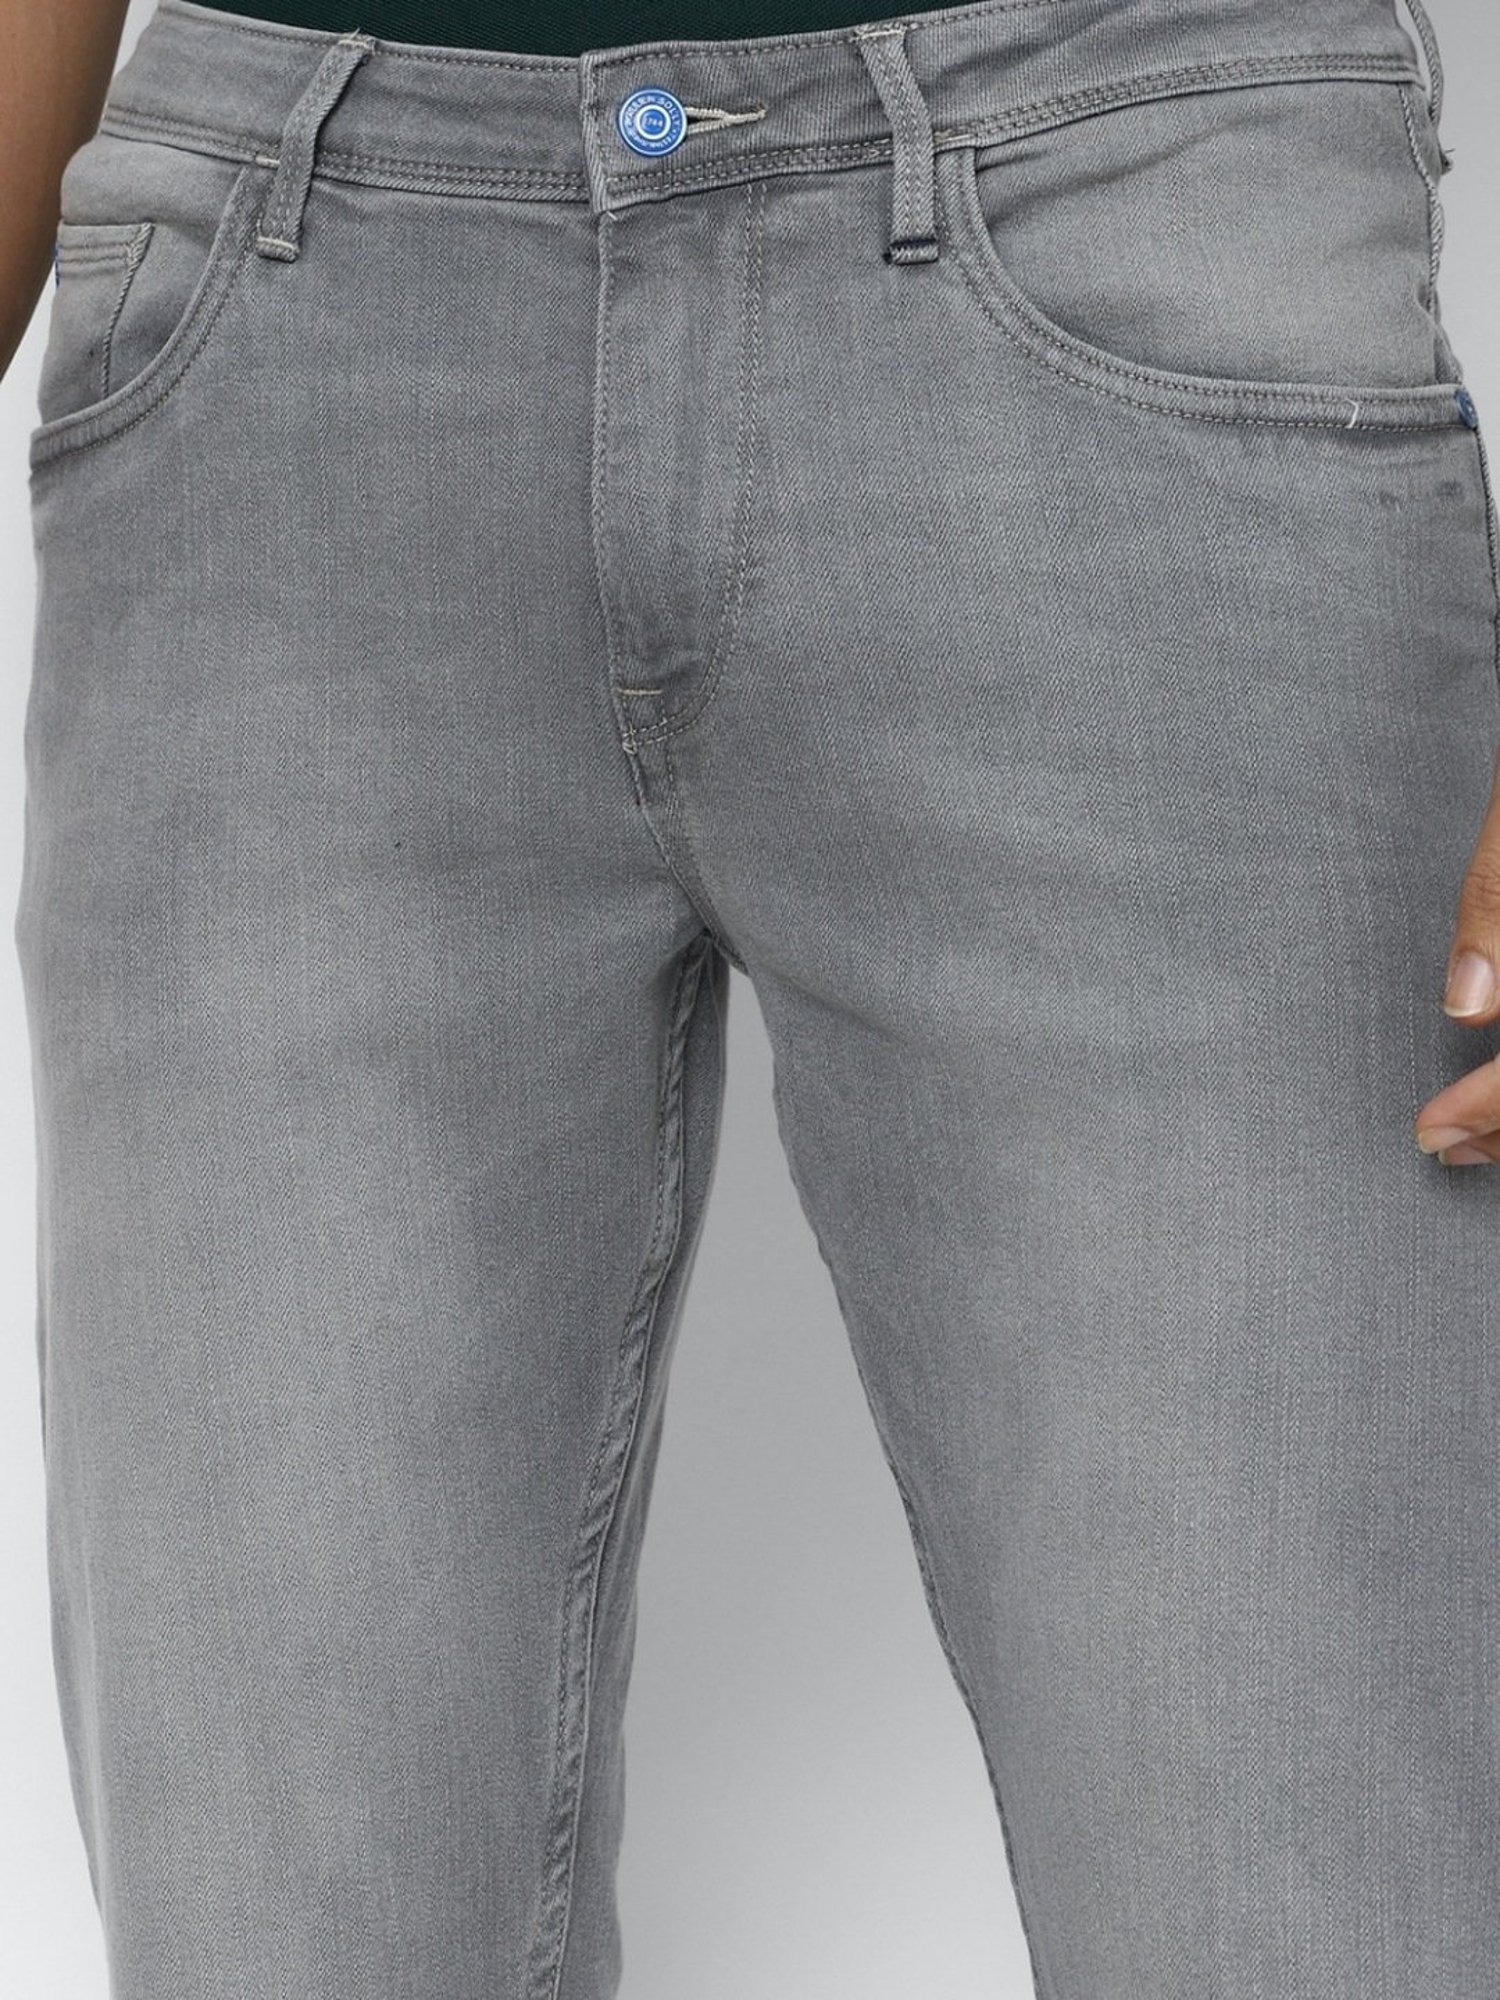 People by Pantaloons Grey Slim Fit Jeans